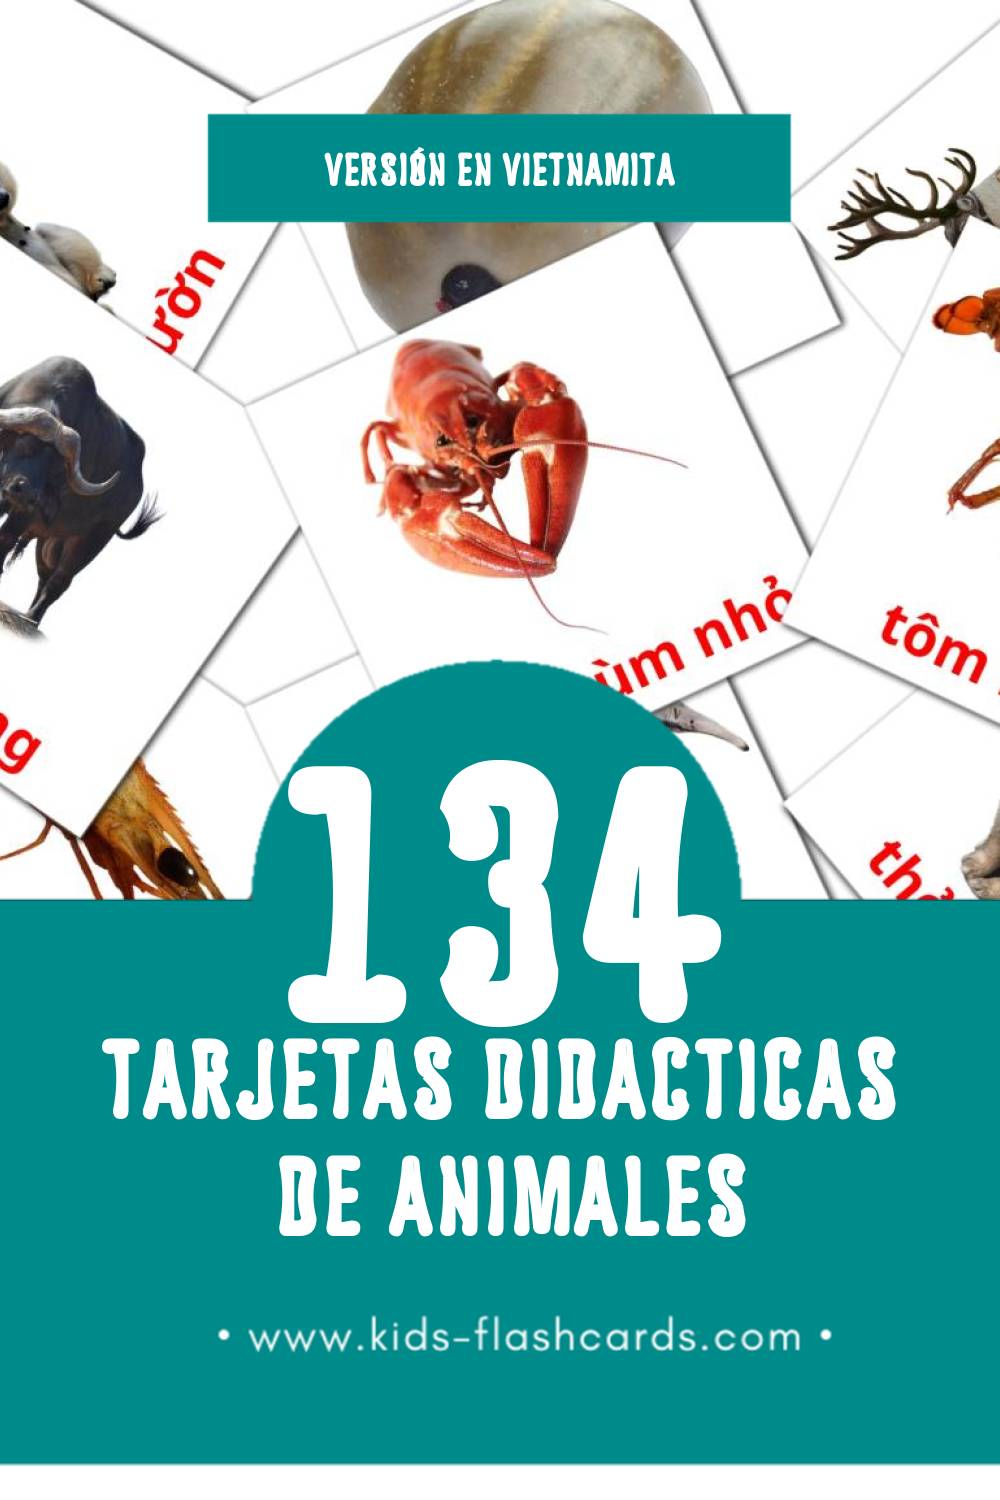 Tarjetas visuales de động vật para niños pequeños (134 tarjetas en Vietnamita)